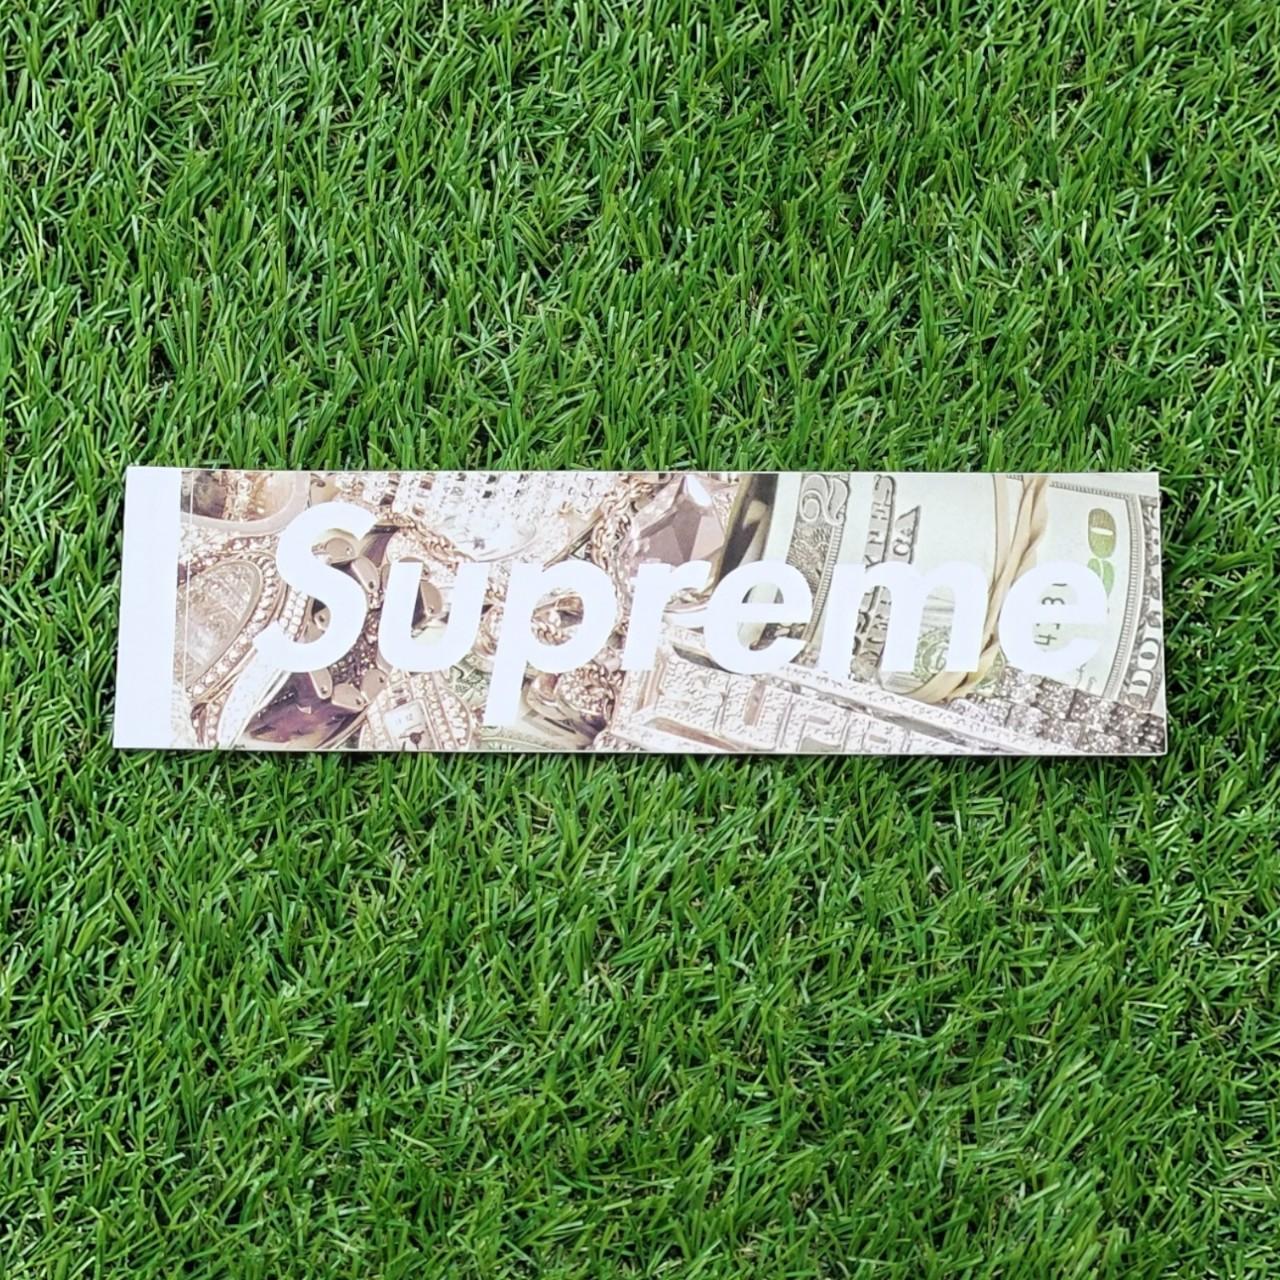 Supreme Box Logo Sticker Bundle ‼️ DEADSTOCK - Depop